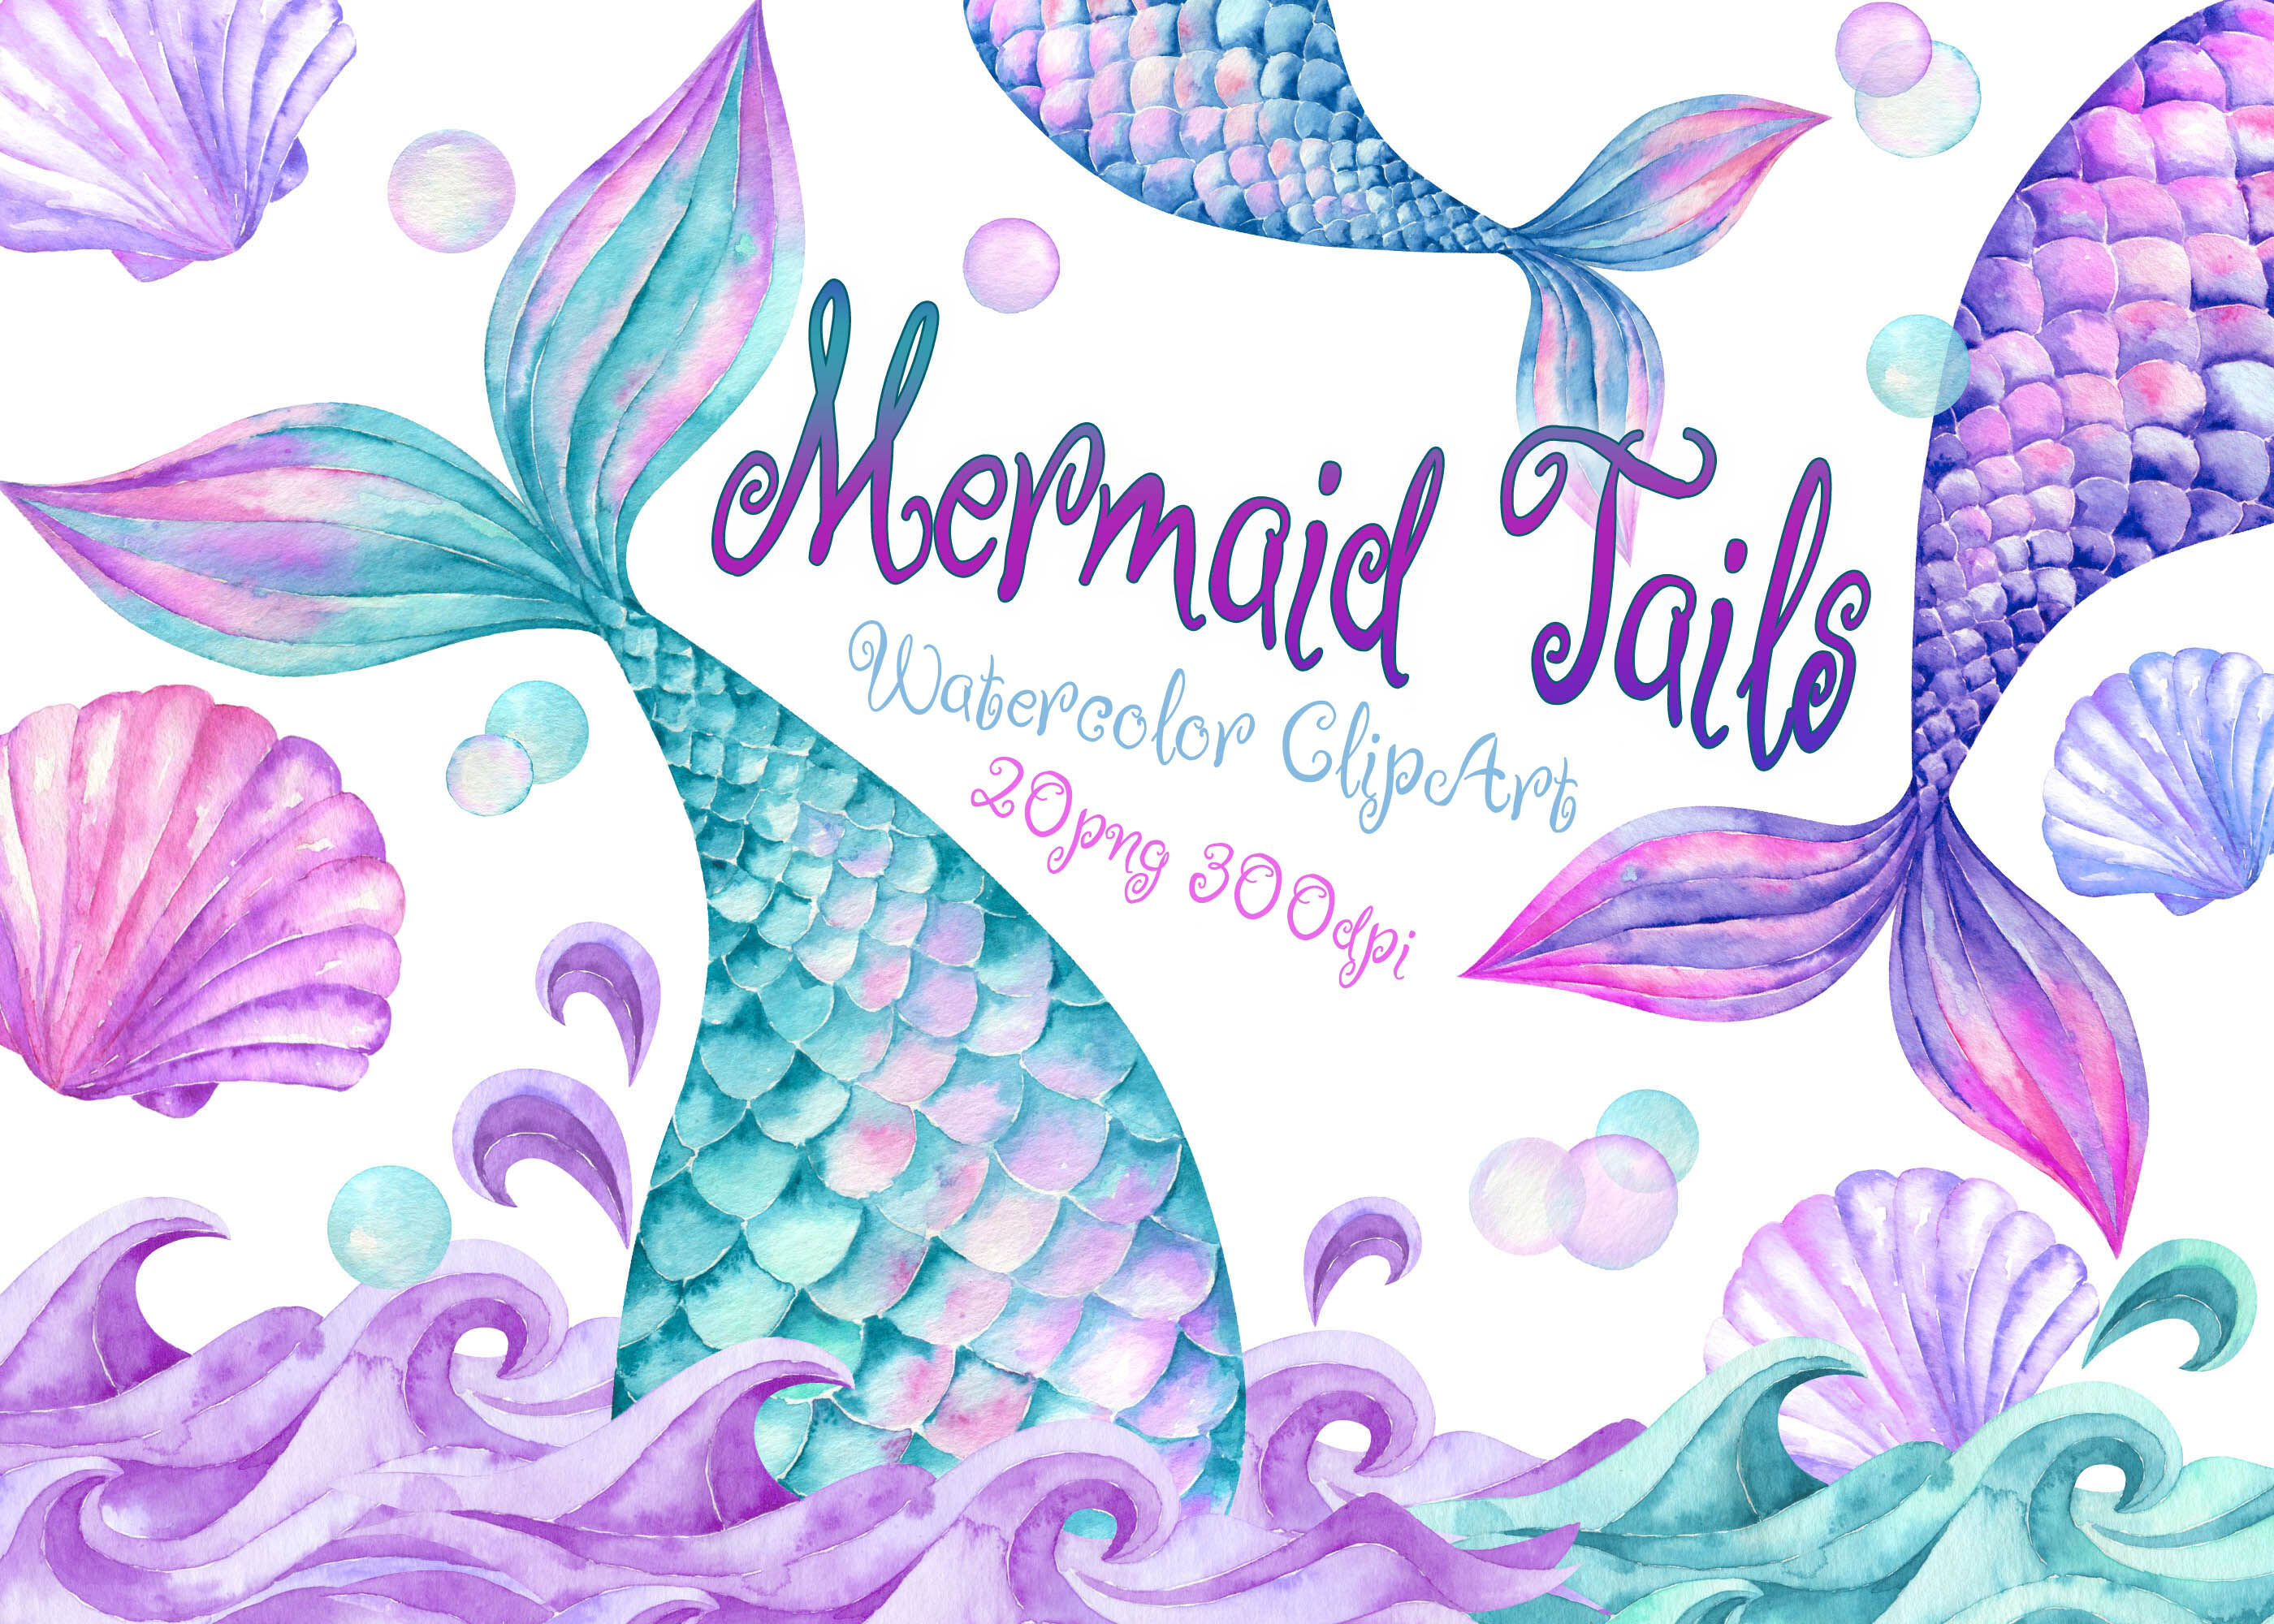 Mermaid tails clipart, mermaid scales, mermaid tail clip art - Clip Art ...